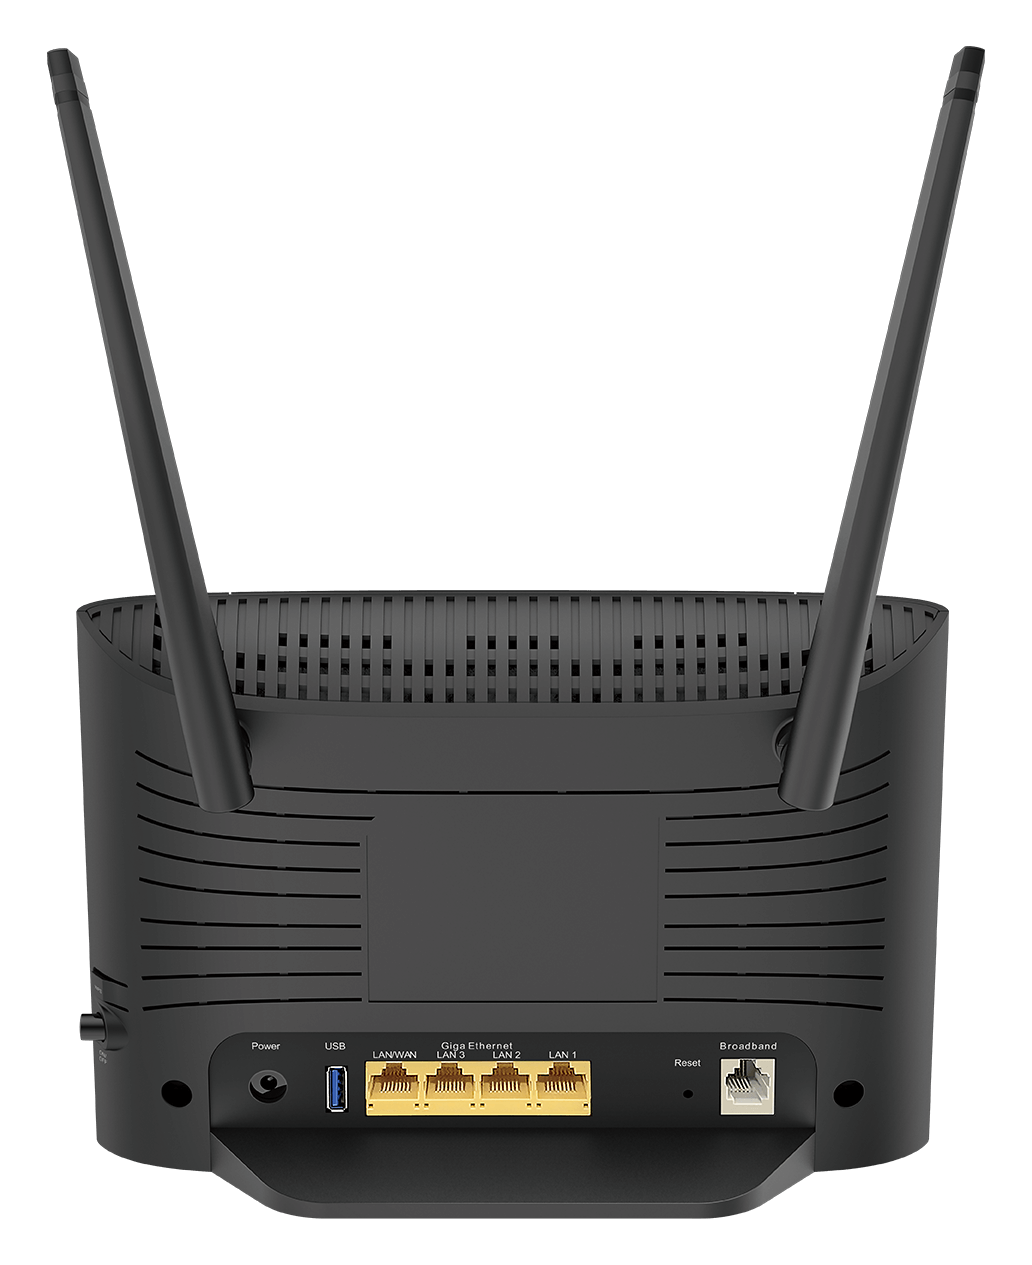 dsl-3788-wireless-ac1200-gigabit-vdsl-adsl-modem-router-d-link-hellas